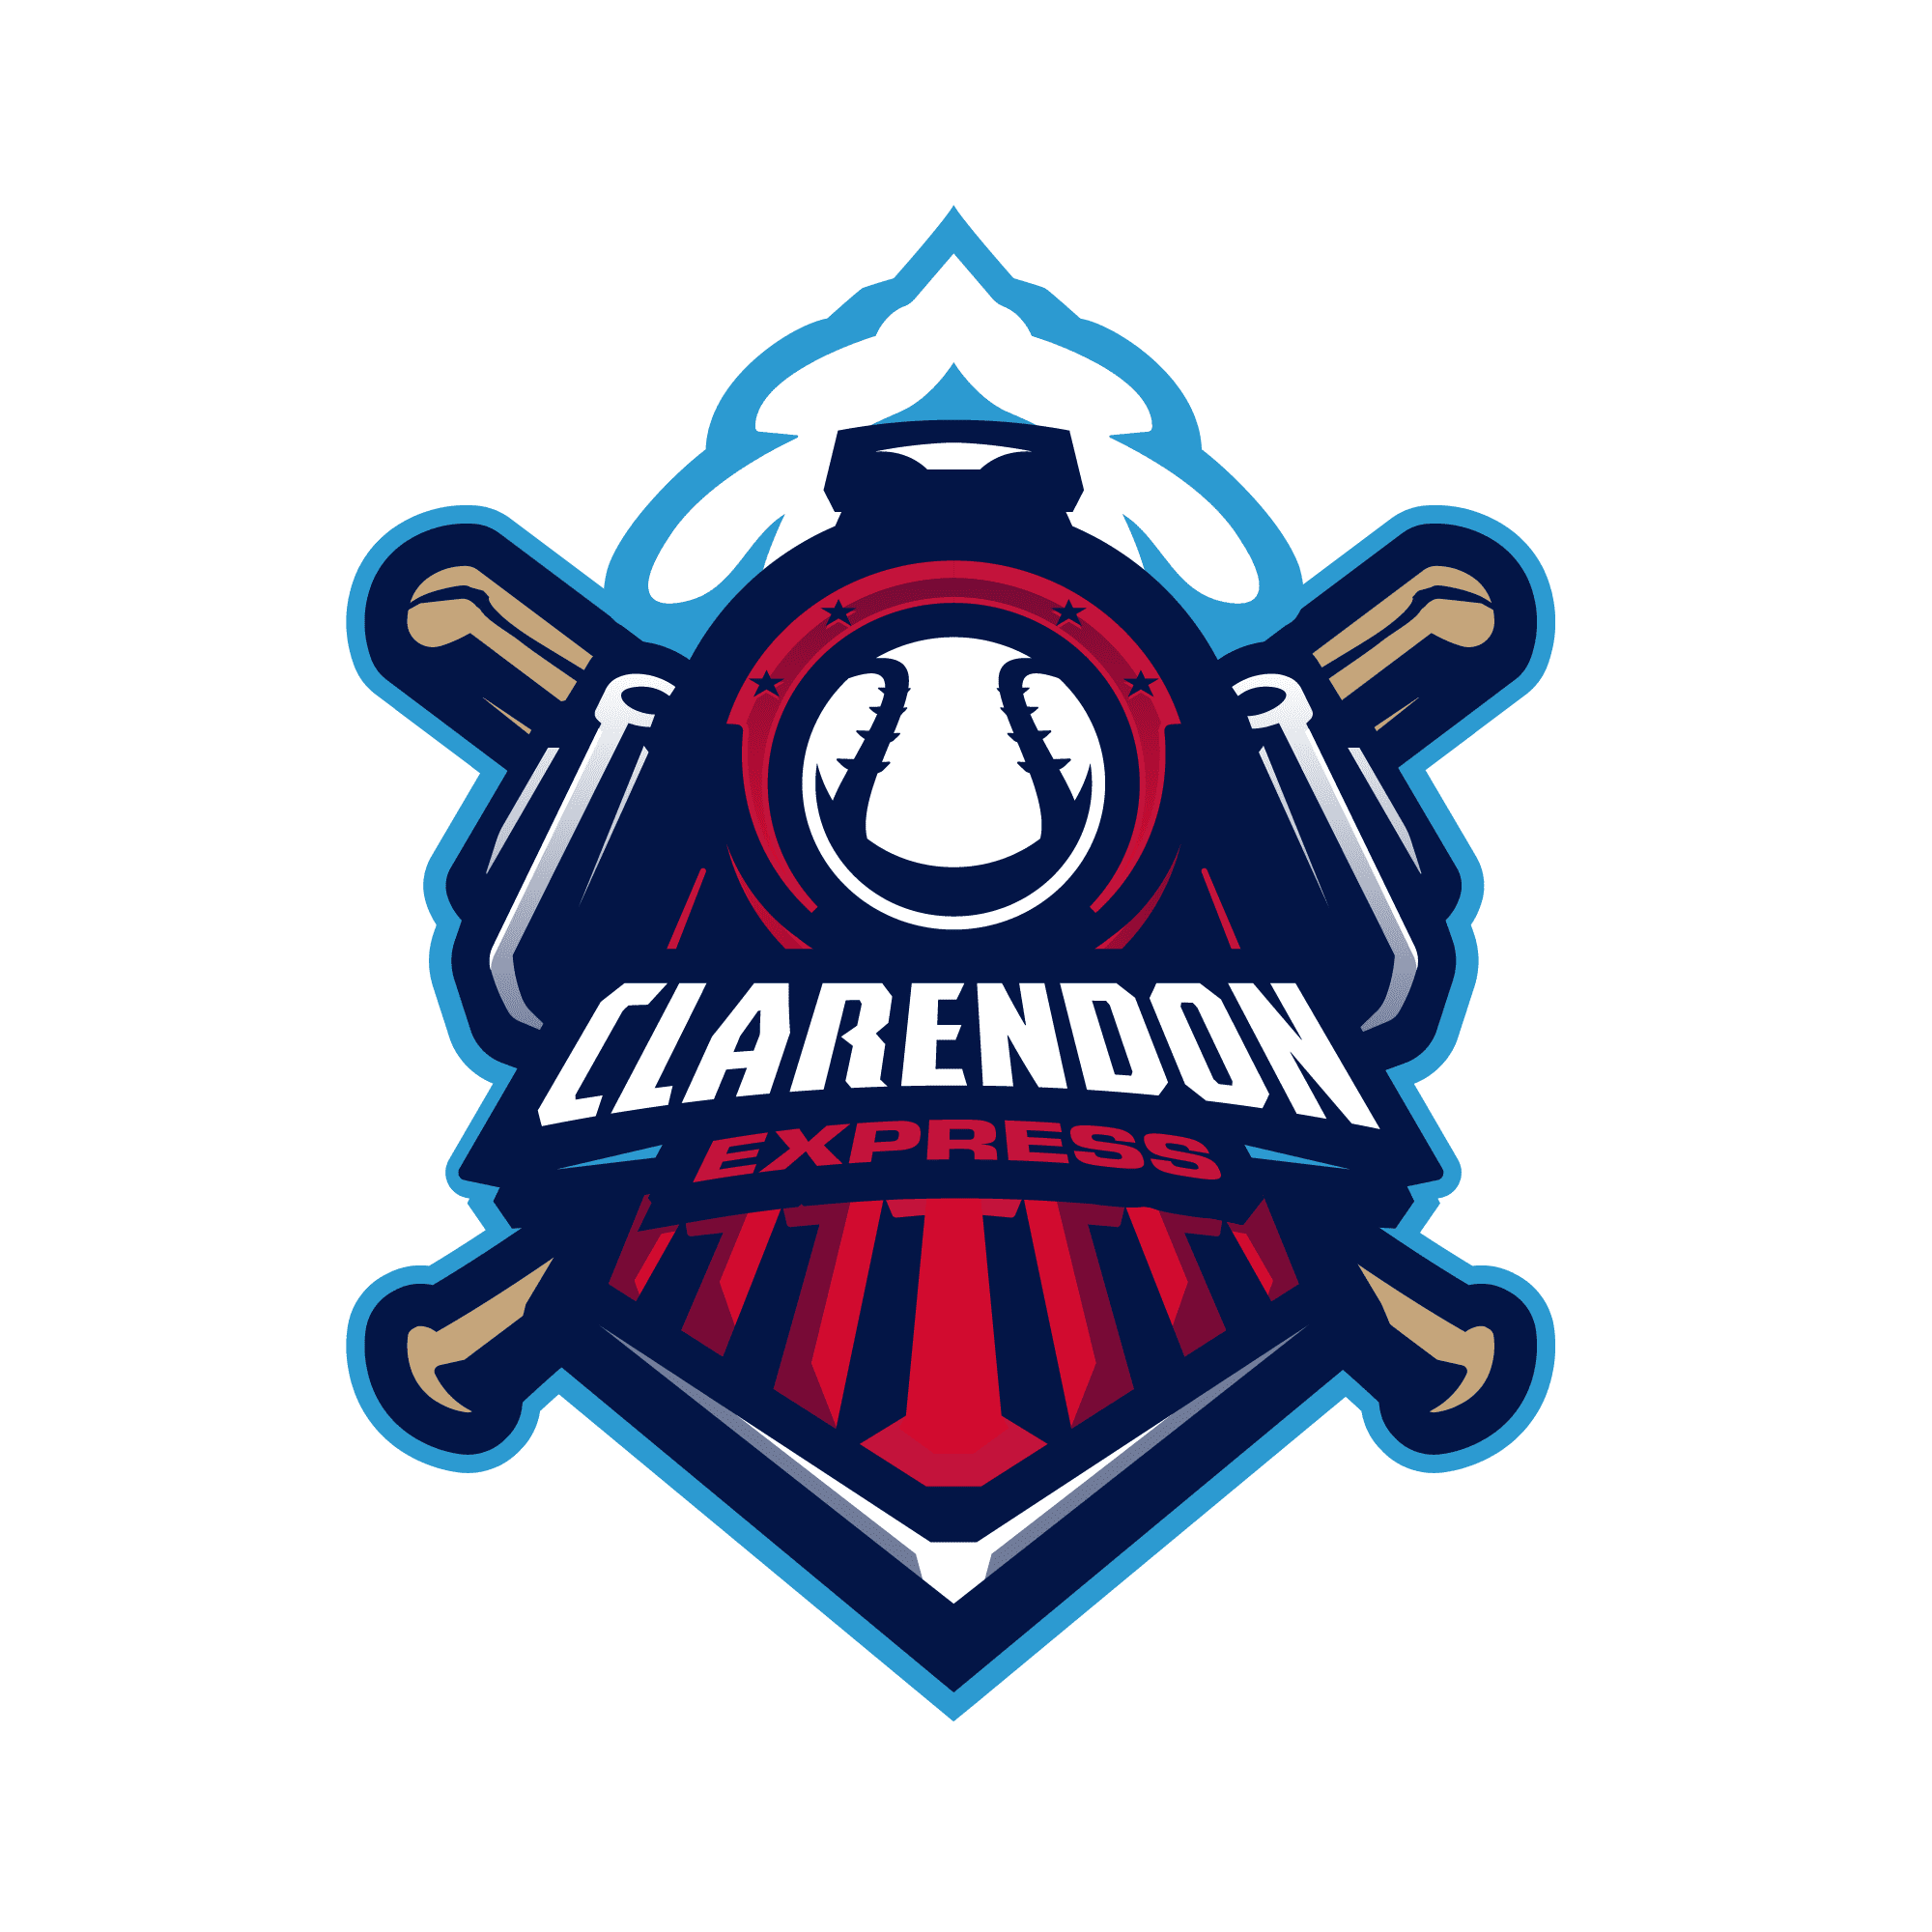 Clarendon Express Travelers Illinois BaseballConnected